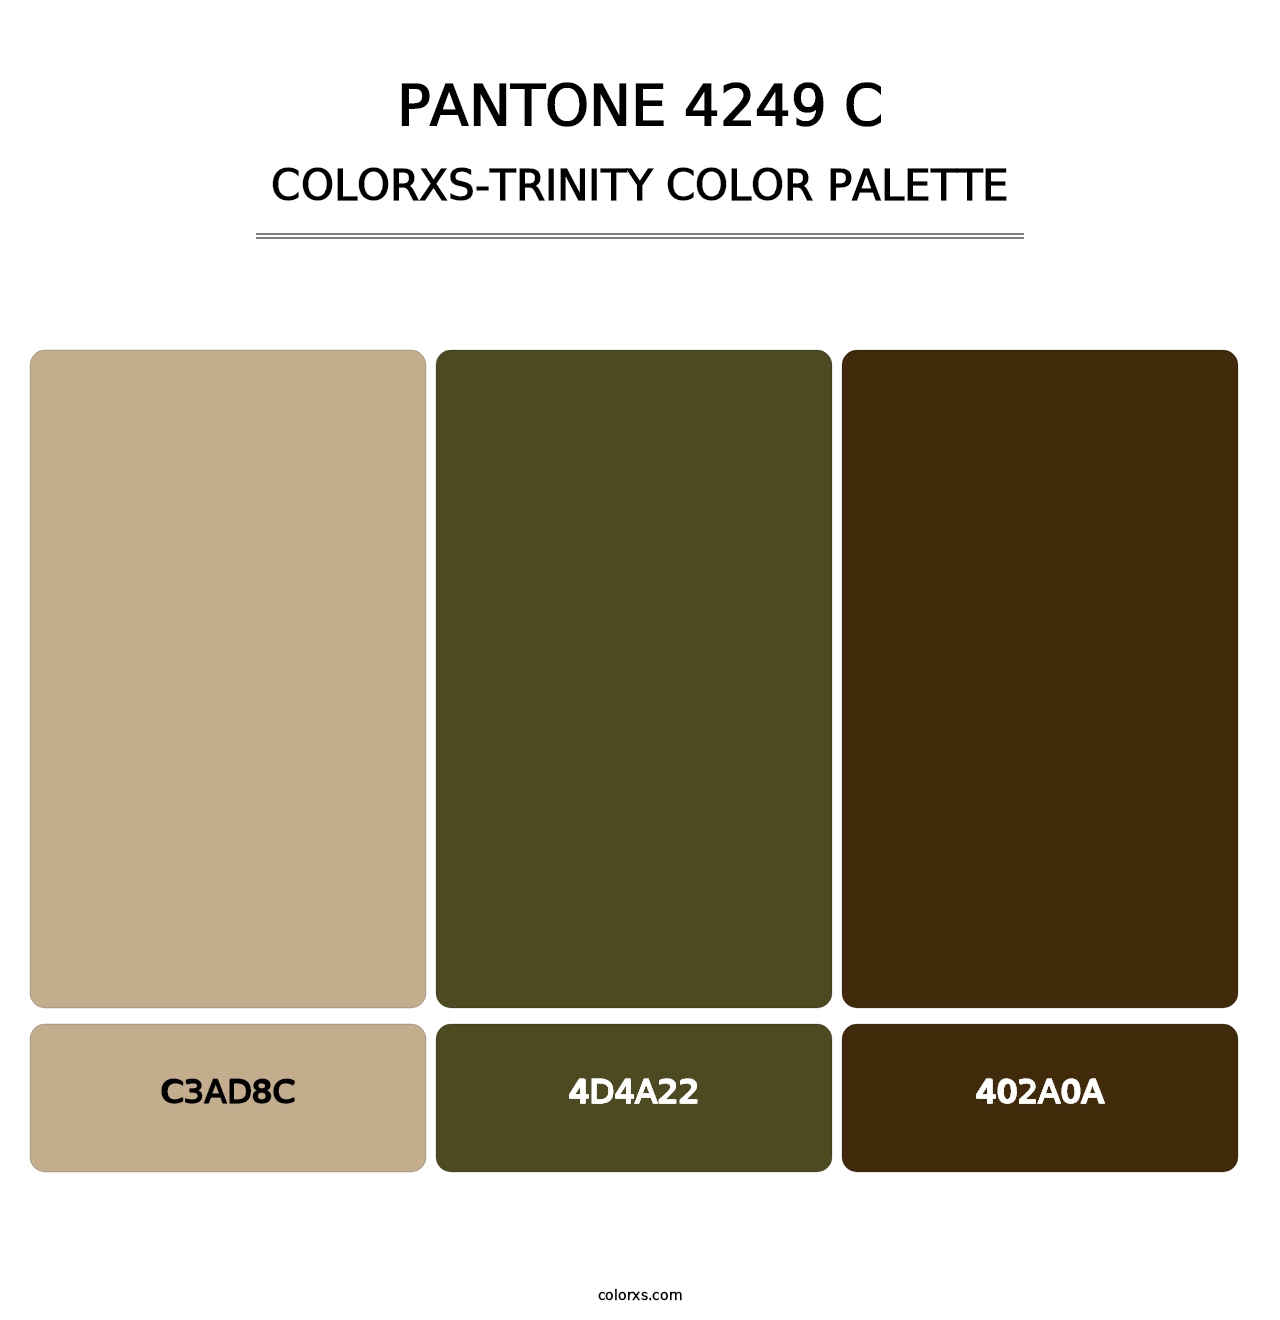 PANTONE 4249 C - Colorxs Trinity Palette